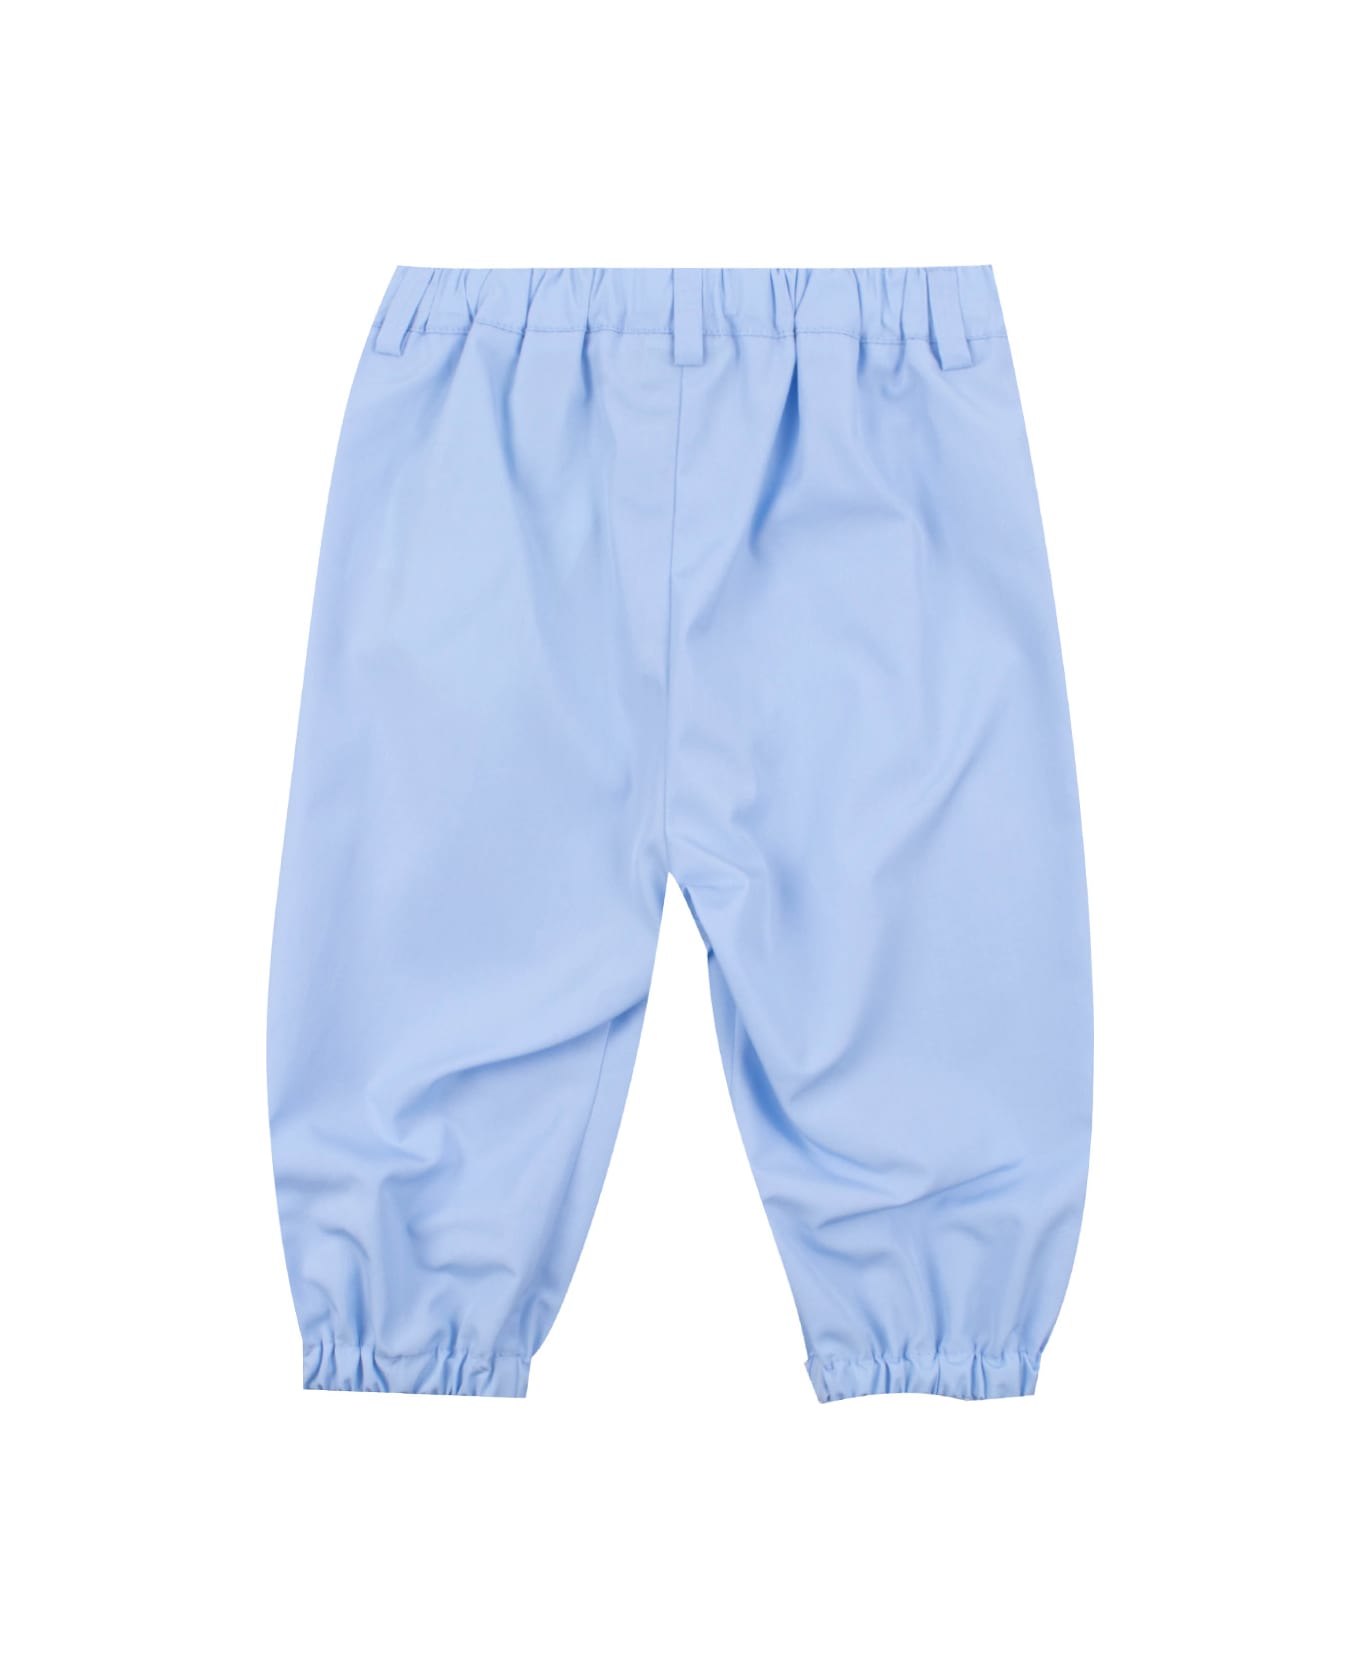 Fendi Cotton Pants - Light blue ボトムス